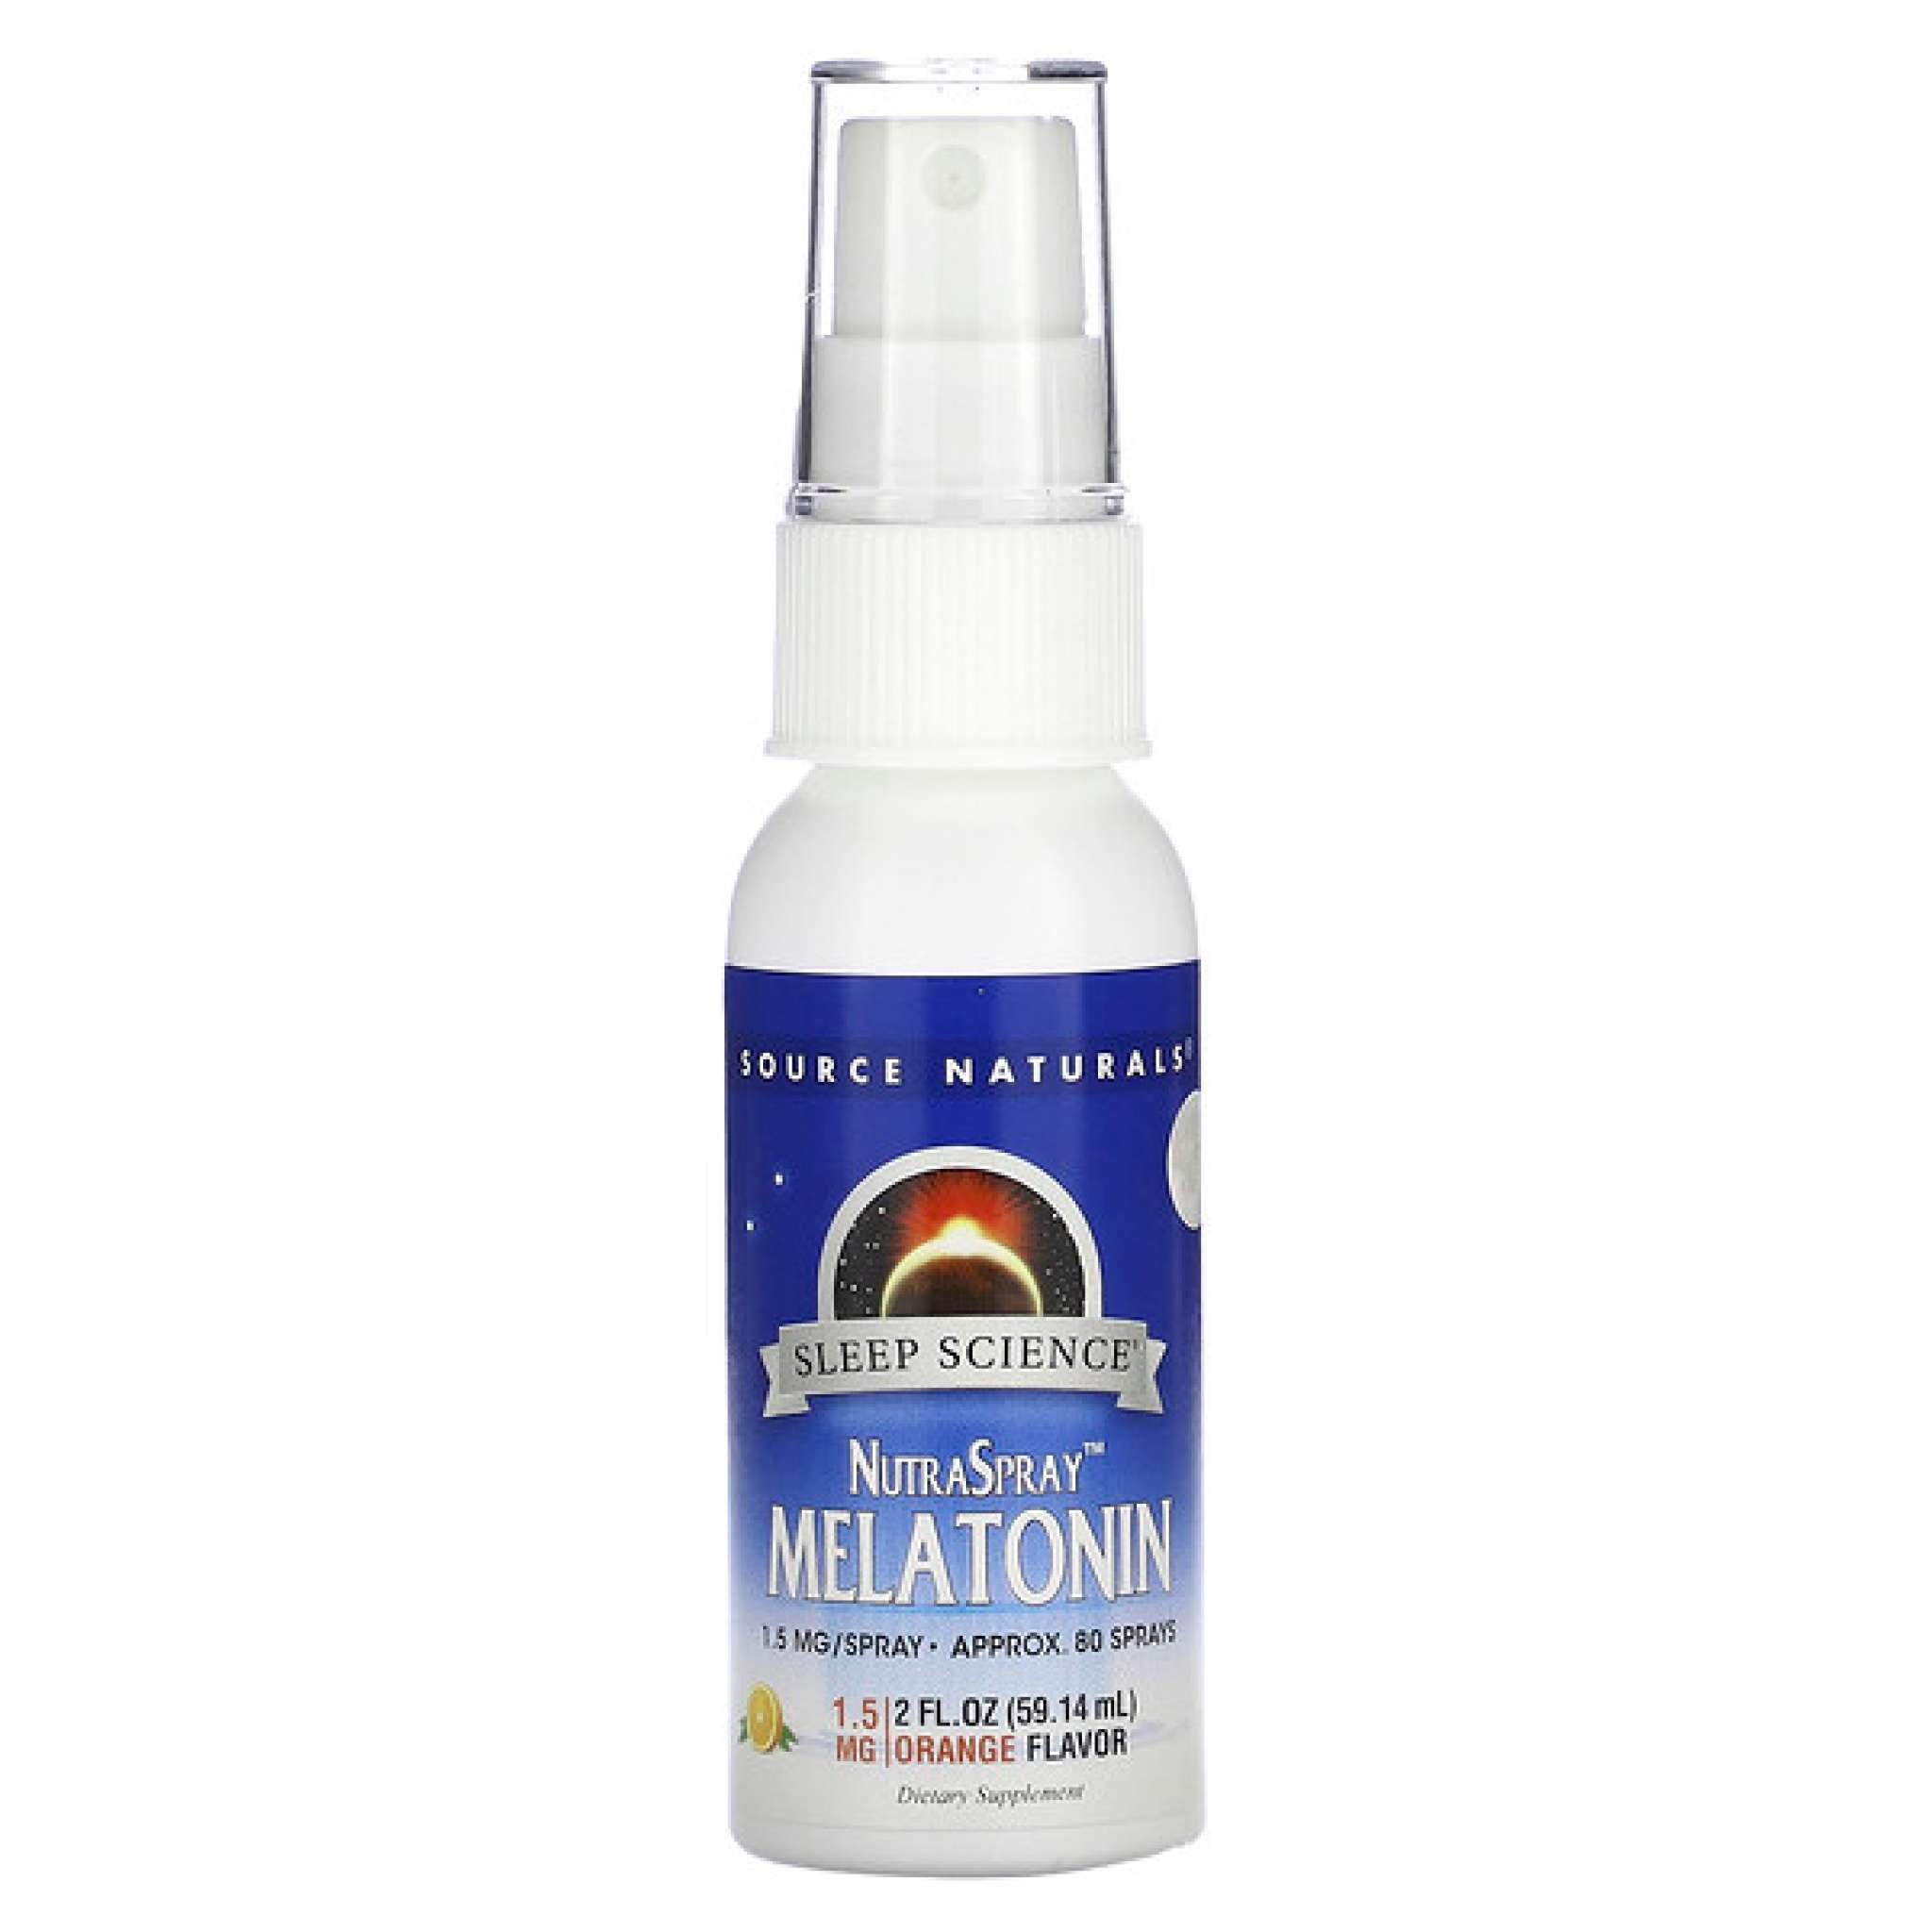 Source Naturals - Melatonin Nutrasray 1.5 mg Ora